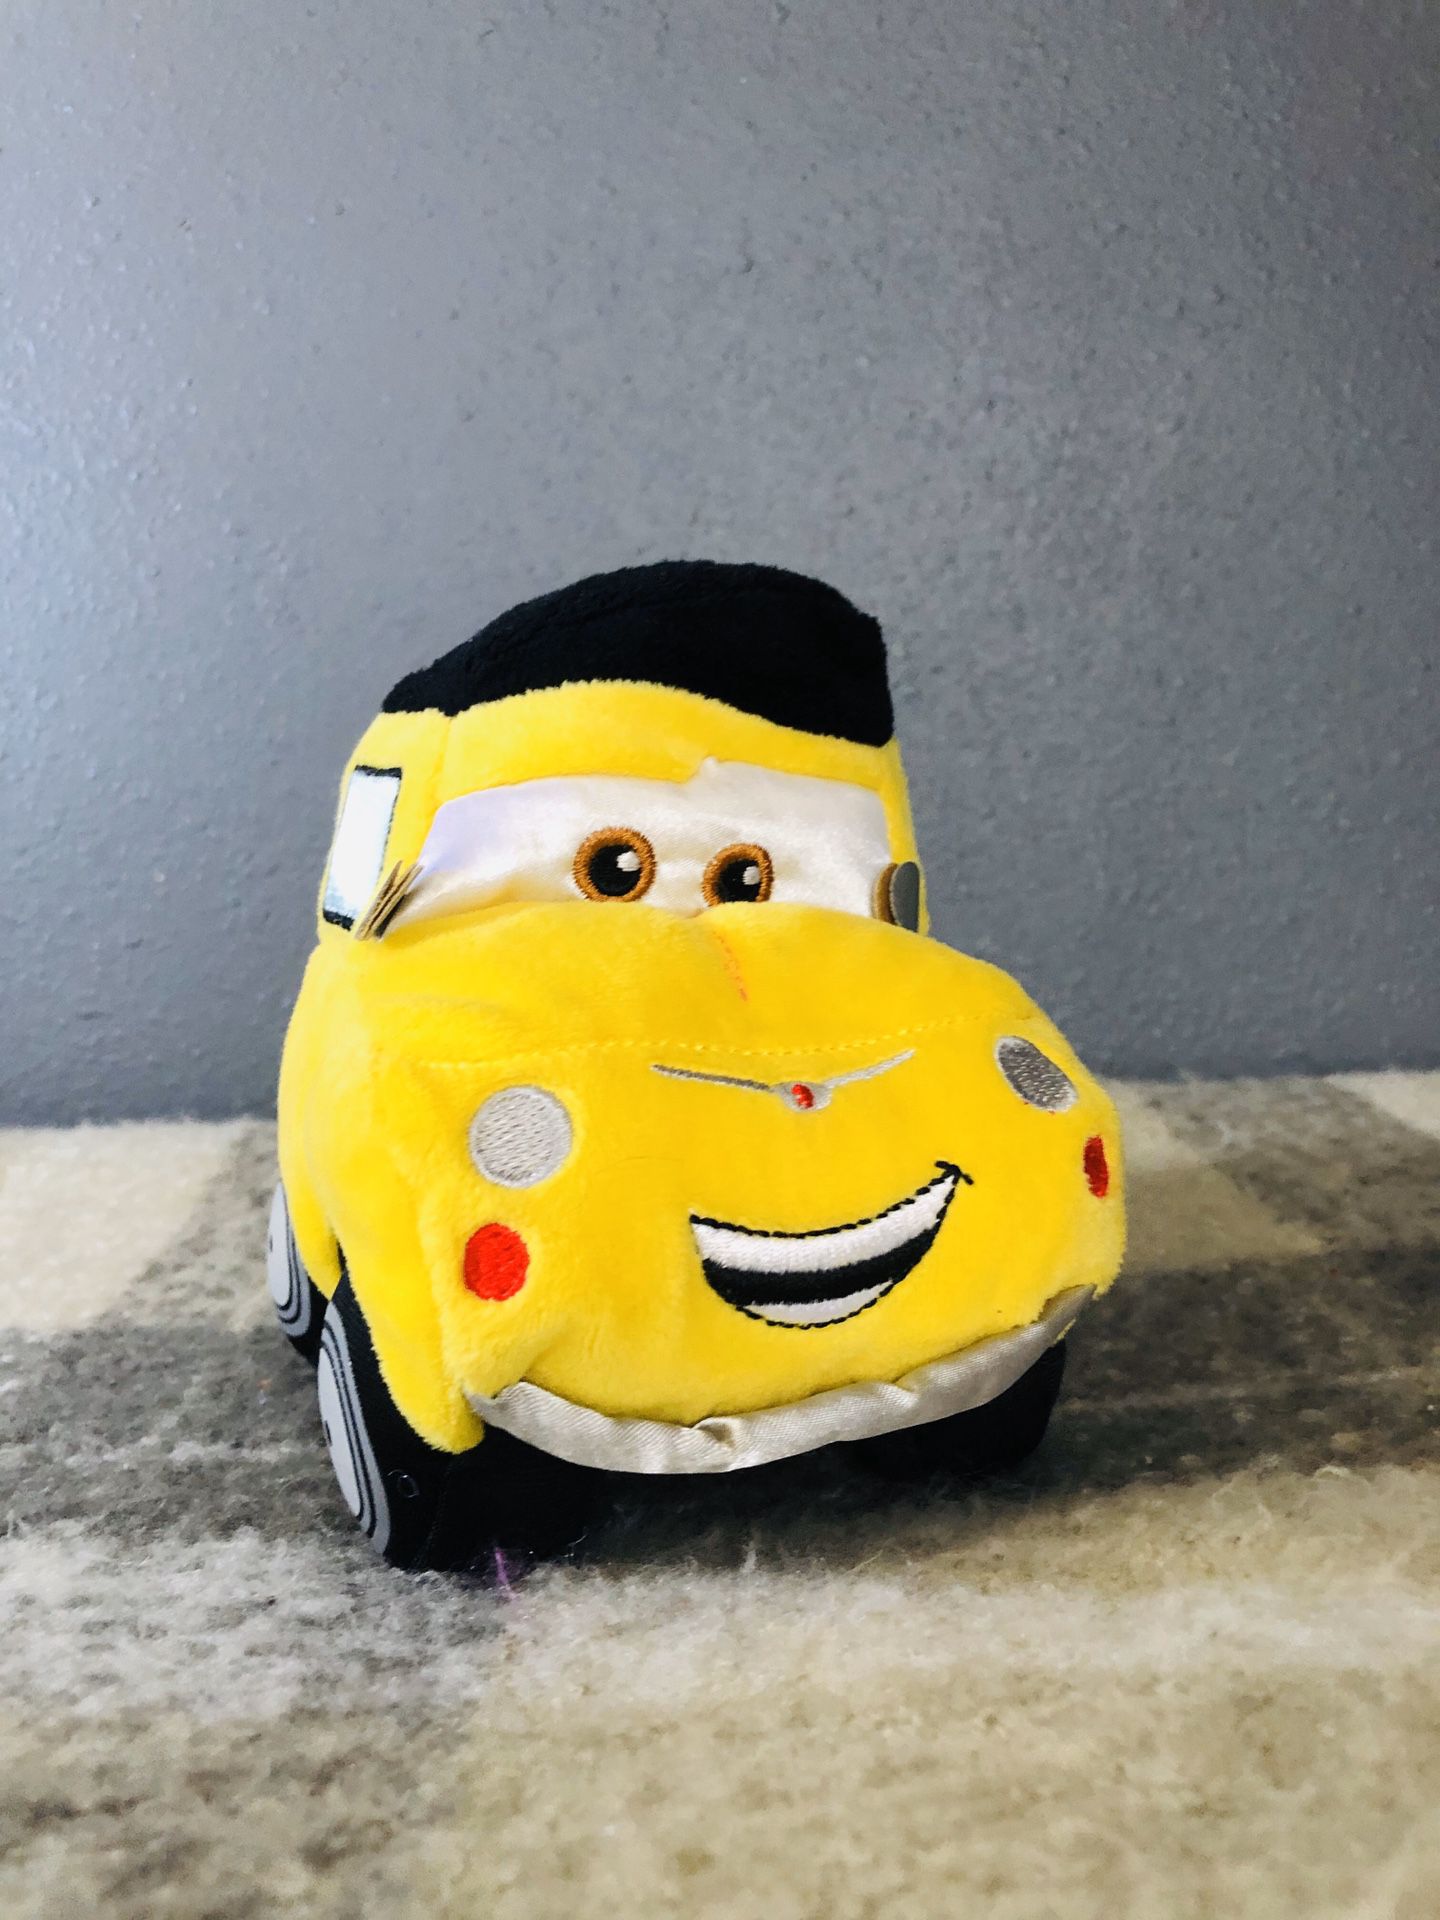 Disney cars movie plush yellow stuffed animal